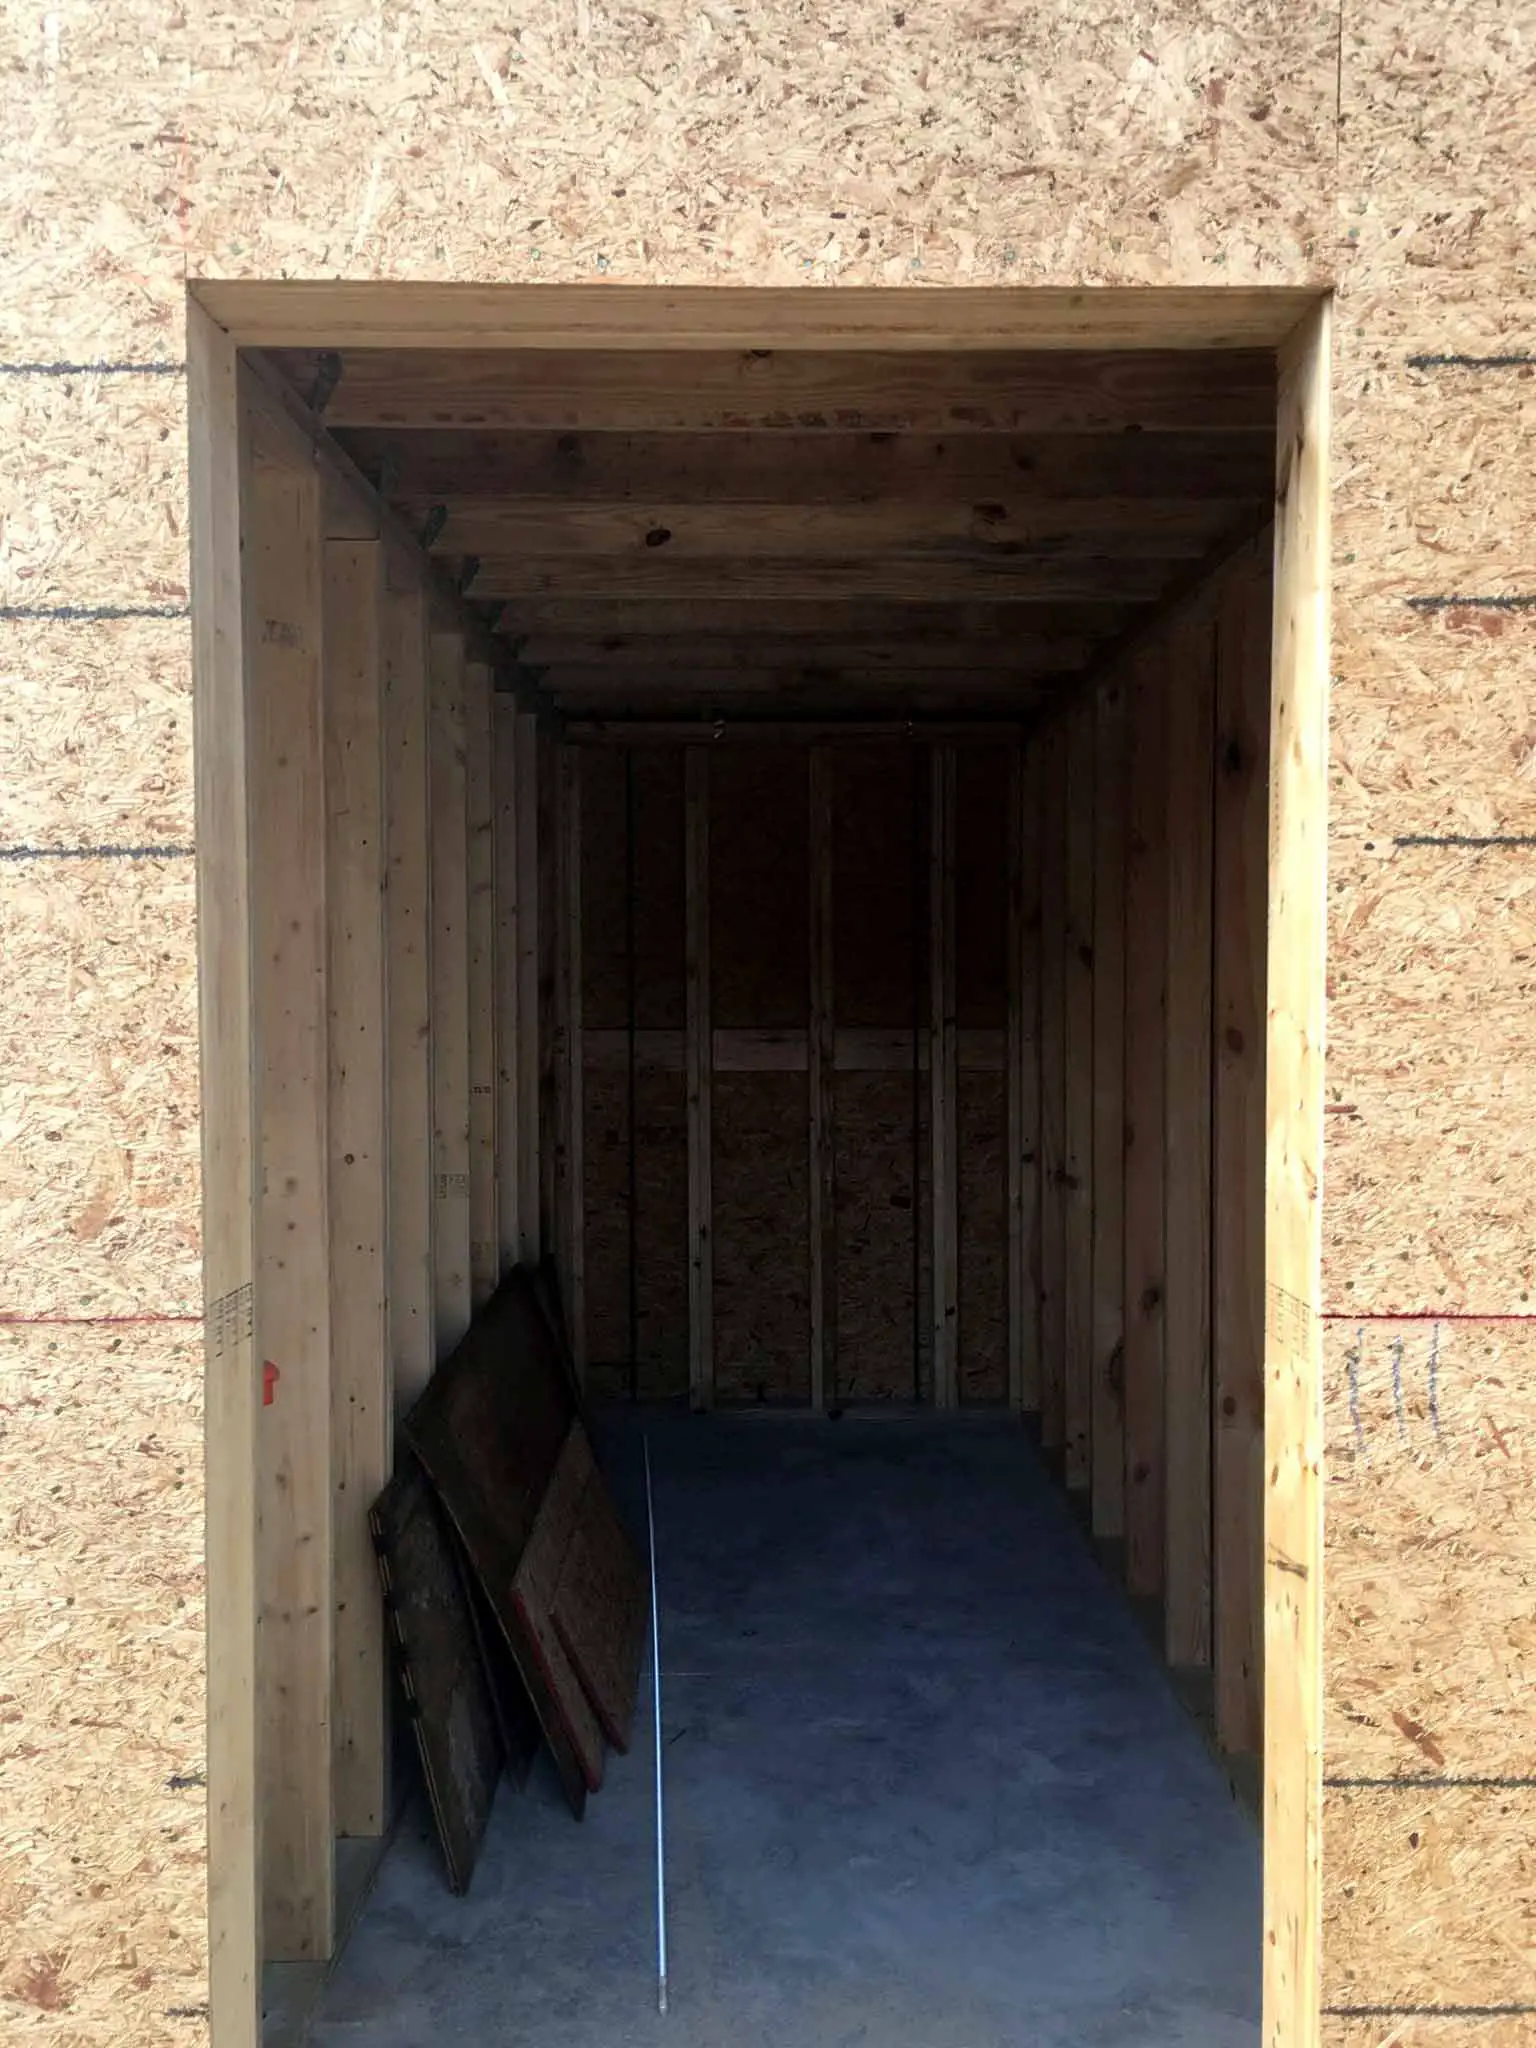 Storage room - guest house construction progress - That Homebird Life Blog